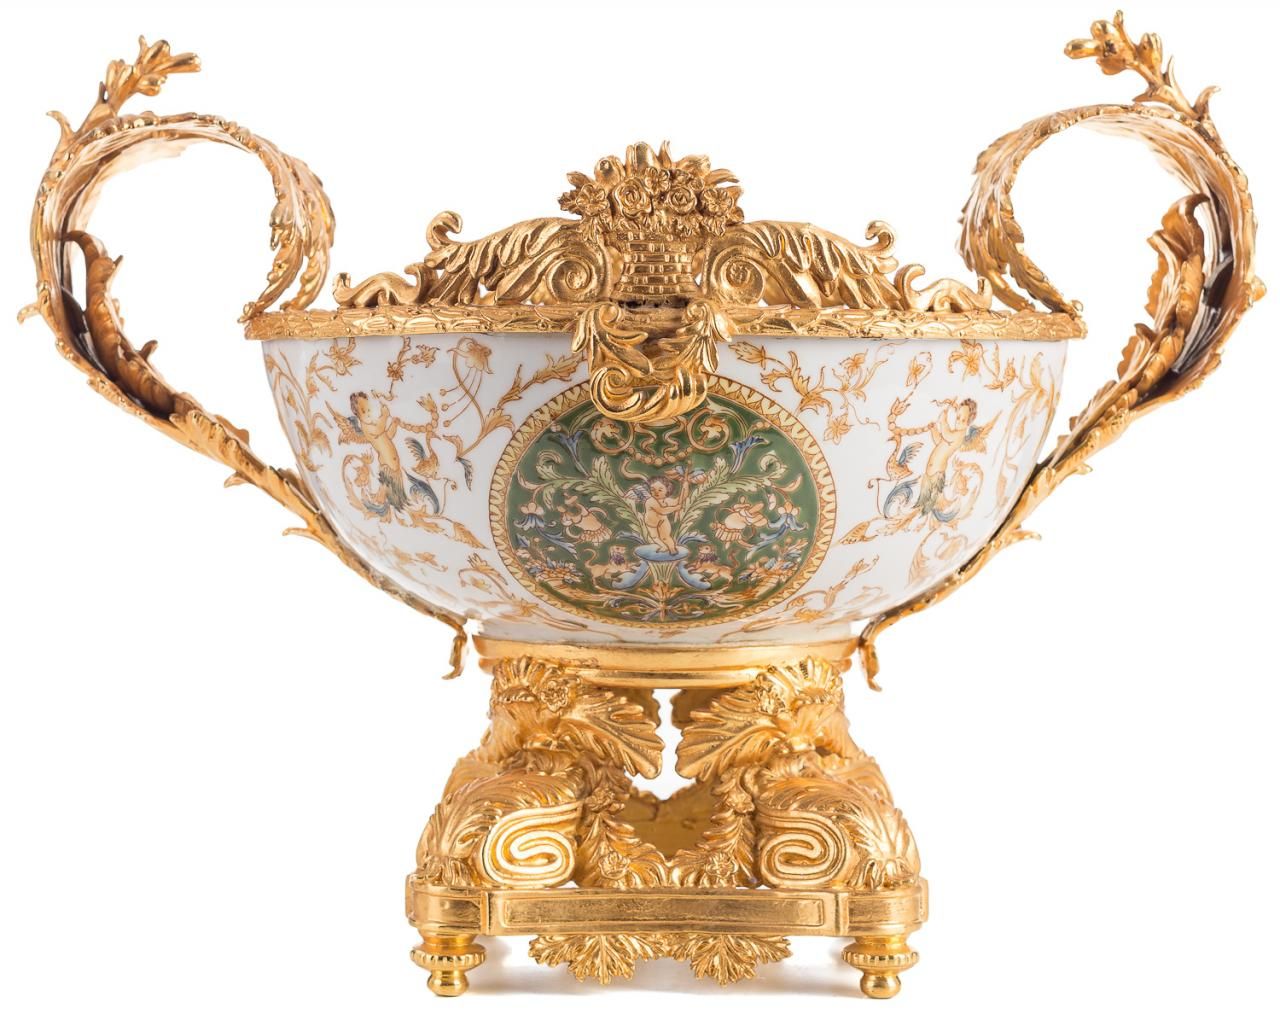 Null 法国珐琅彩瓷器中心器皿镶嵌在鎏金铜器中。装饰有文艺复兴时期的图案，叶形把手和侧面的花瓶。法国，19世纪。

34 x 30 x 46厘米。